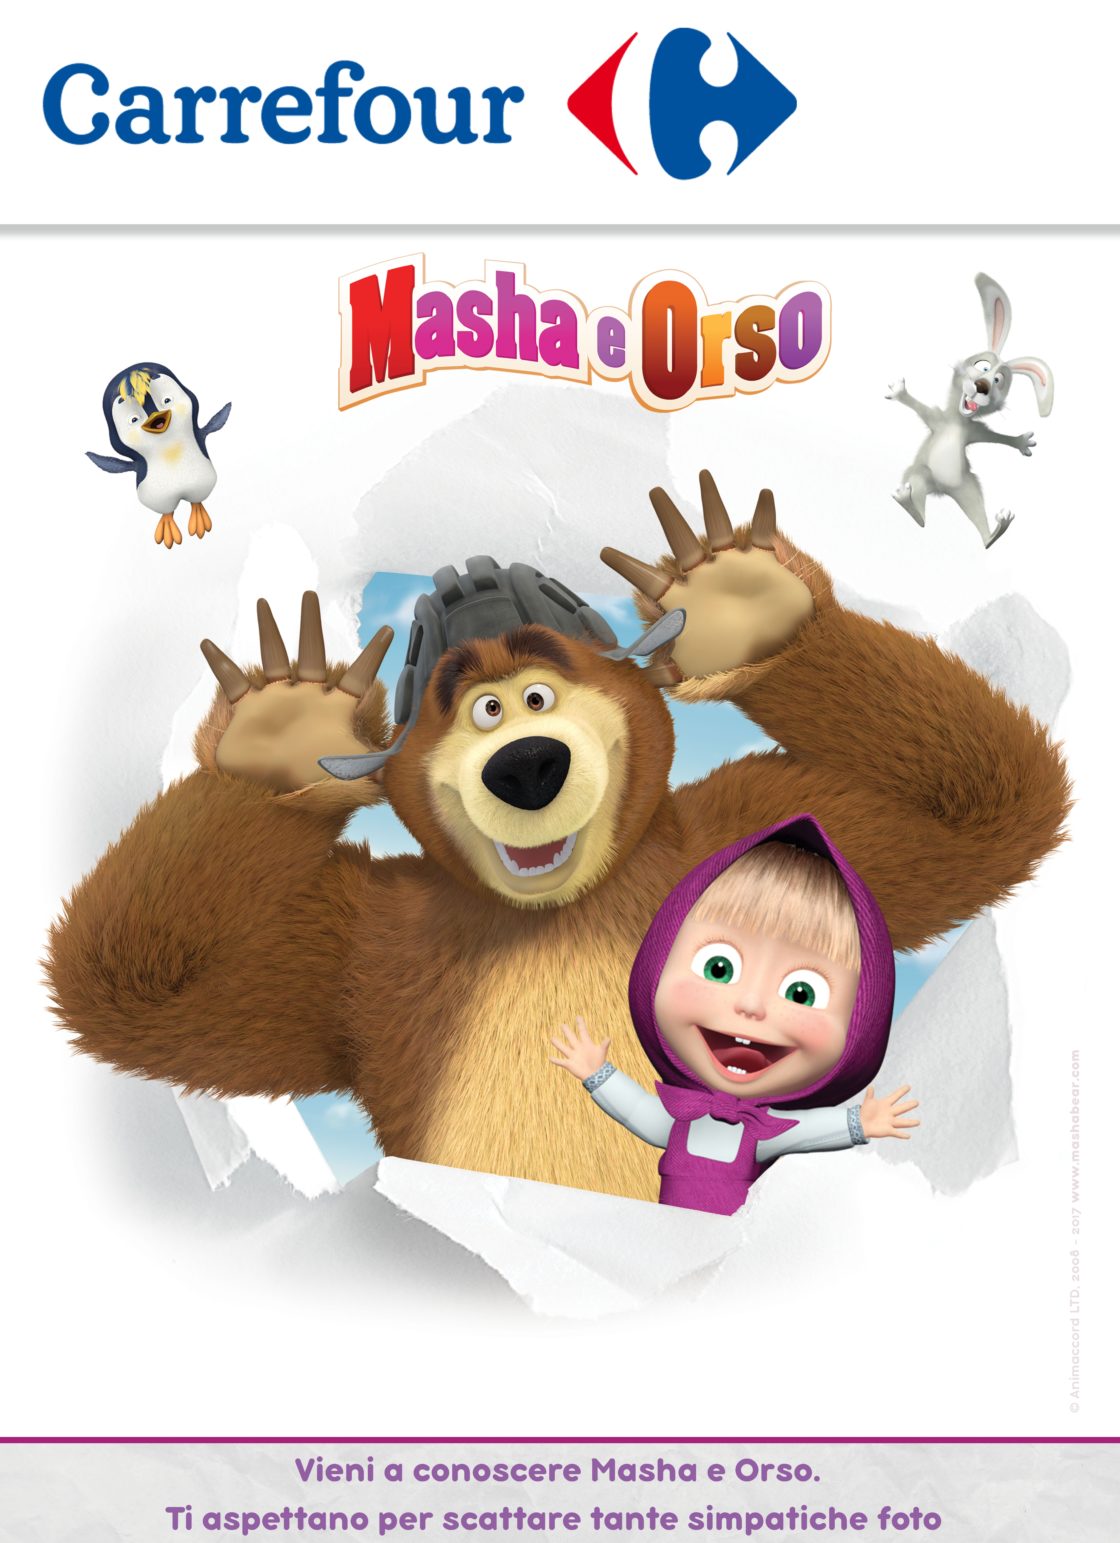 Masha orso. Masha and Orso реклама. Masha e Orso 13 Россия 1. Masha e Orso logo. Мистерия звука DVD Маша и медведь.